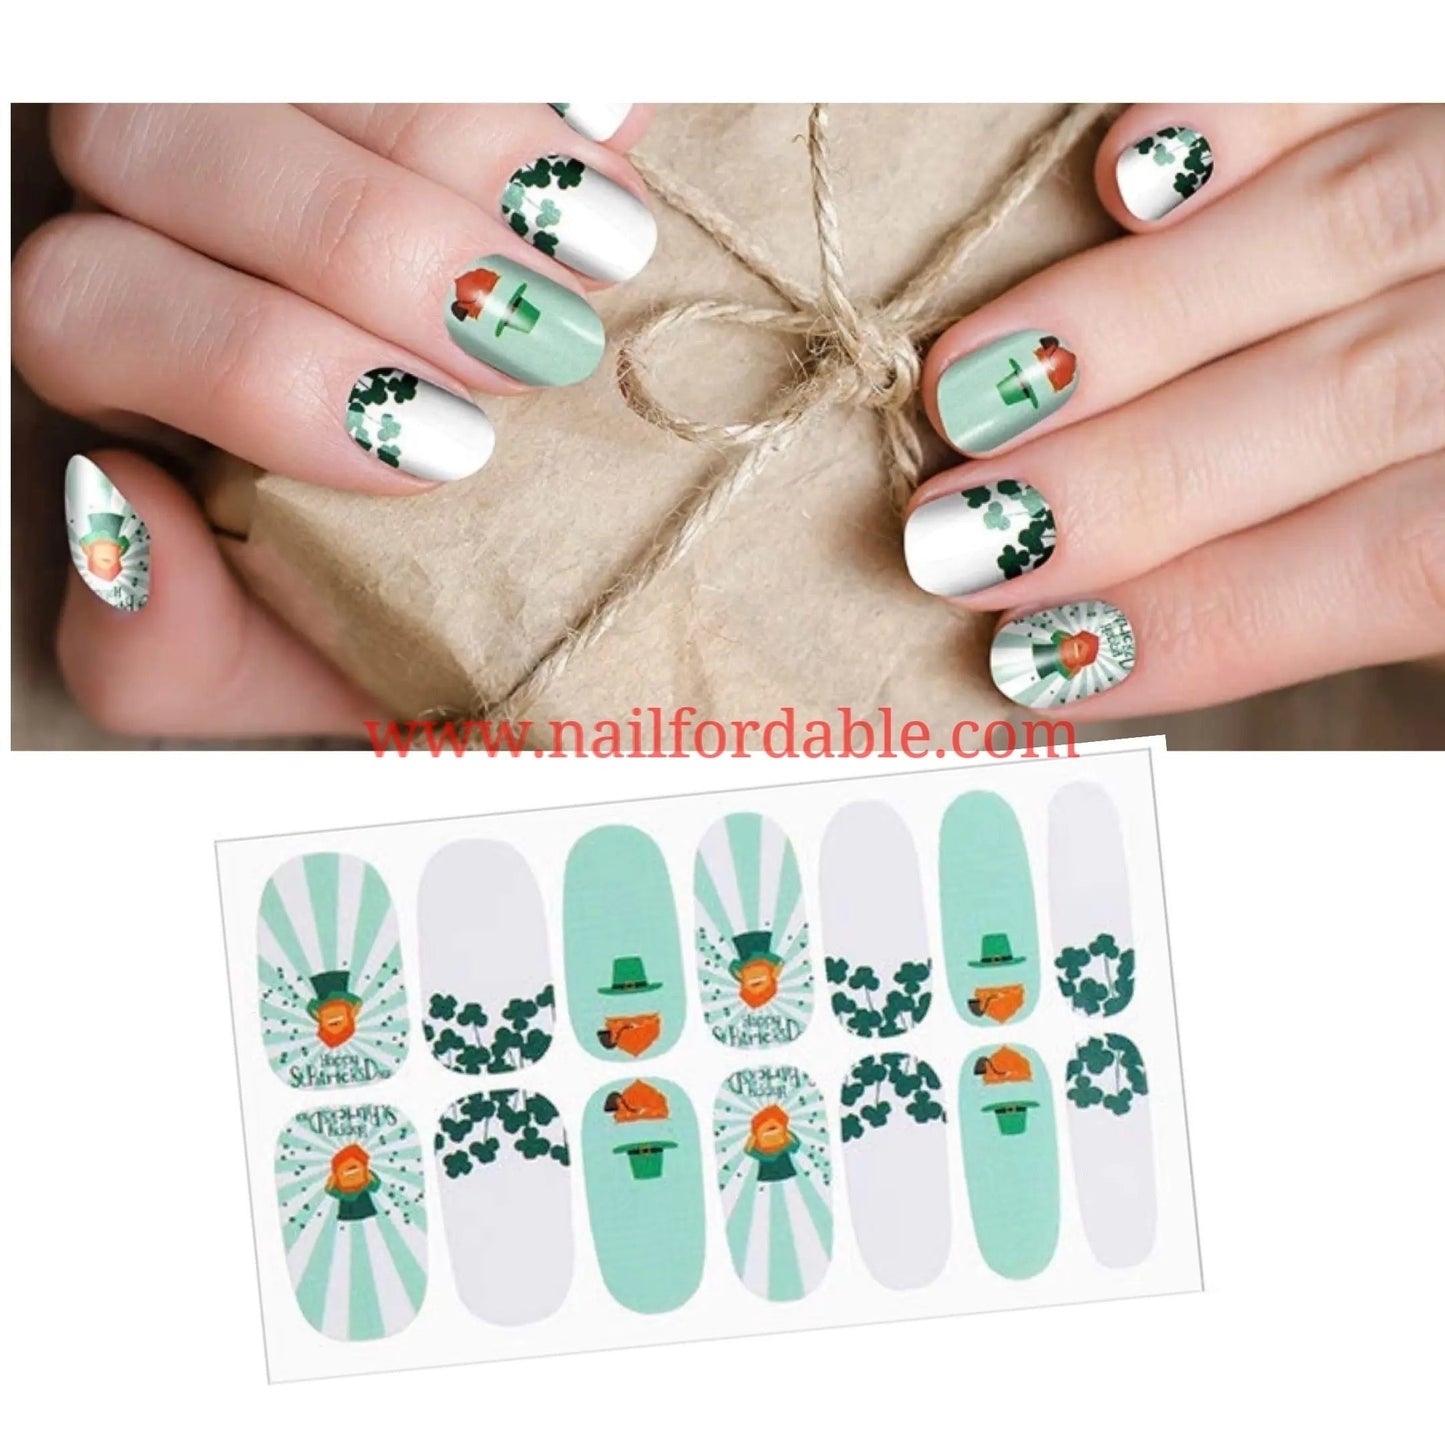 Happy St. Patrickâ€™s Day Nail Wraps | Semi Cured Gel Wraps | Gel Nail Wraps |Nail Polish | Nail Stickers